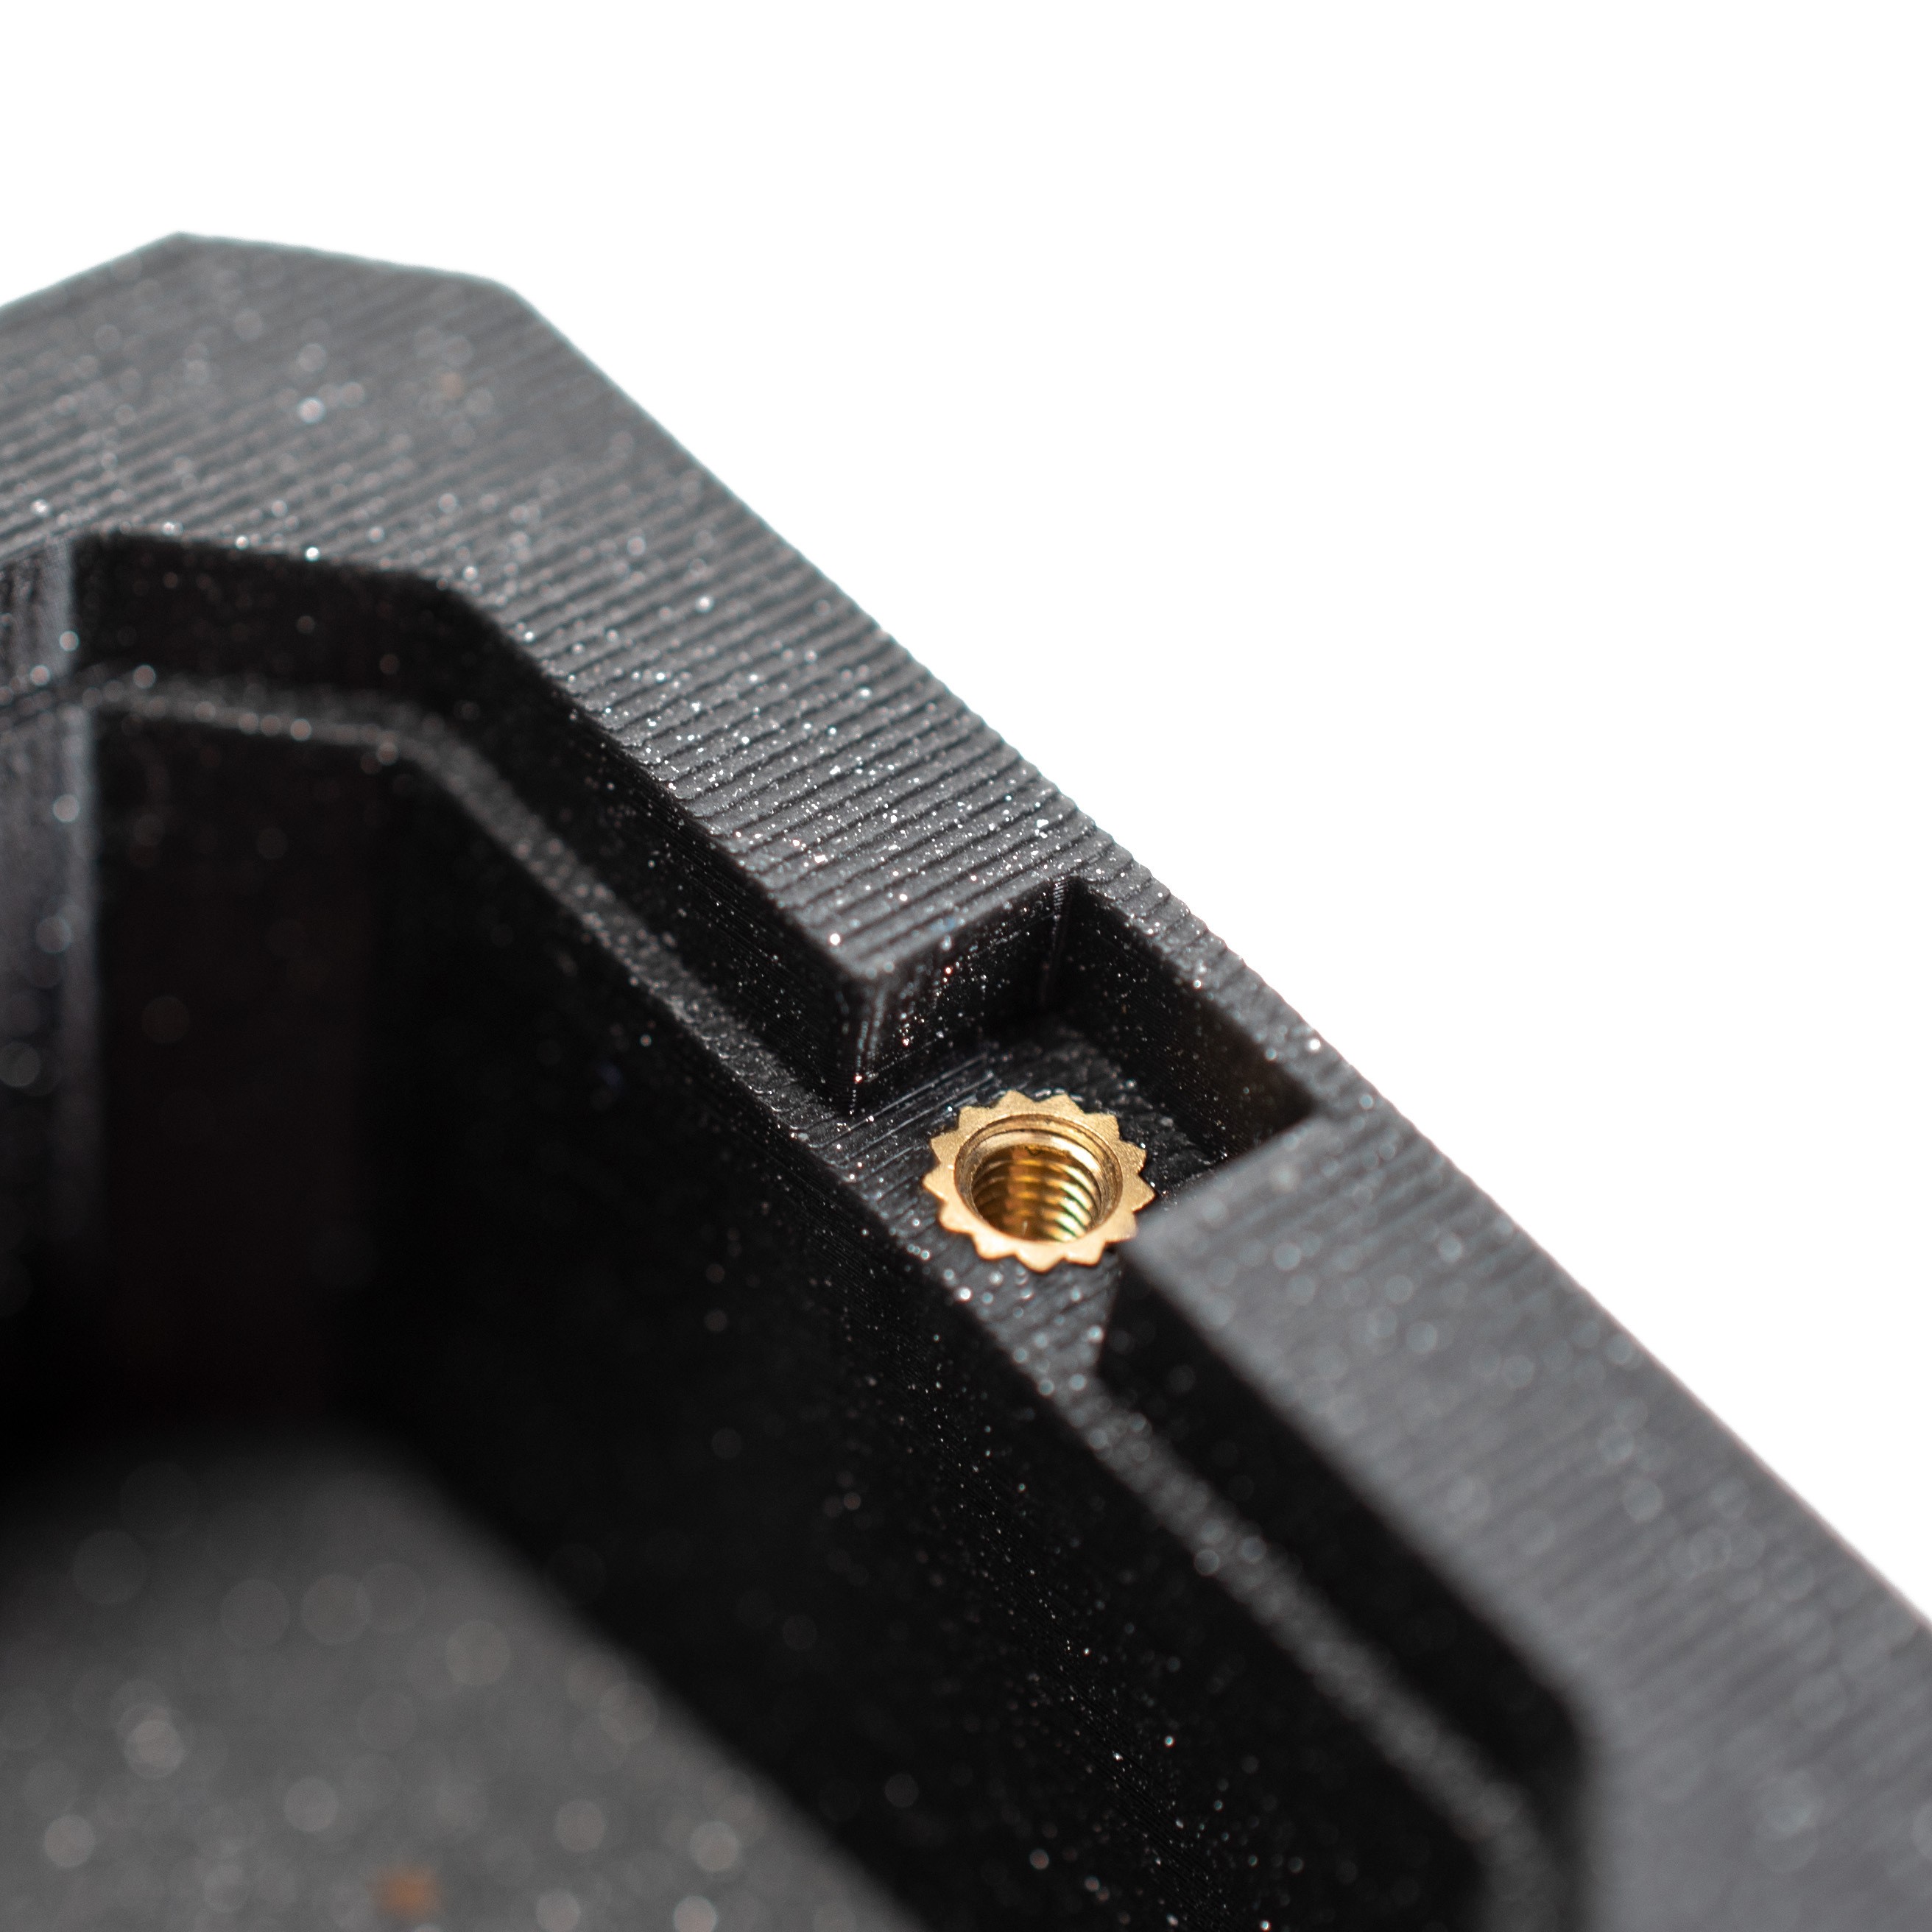 100-1000PC M3 Thread Knurled Brass Threaded Set Heat Resistant Insert  Embedment